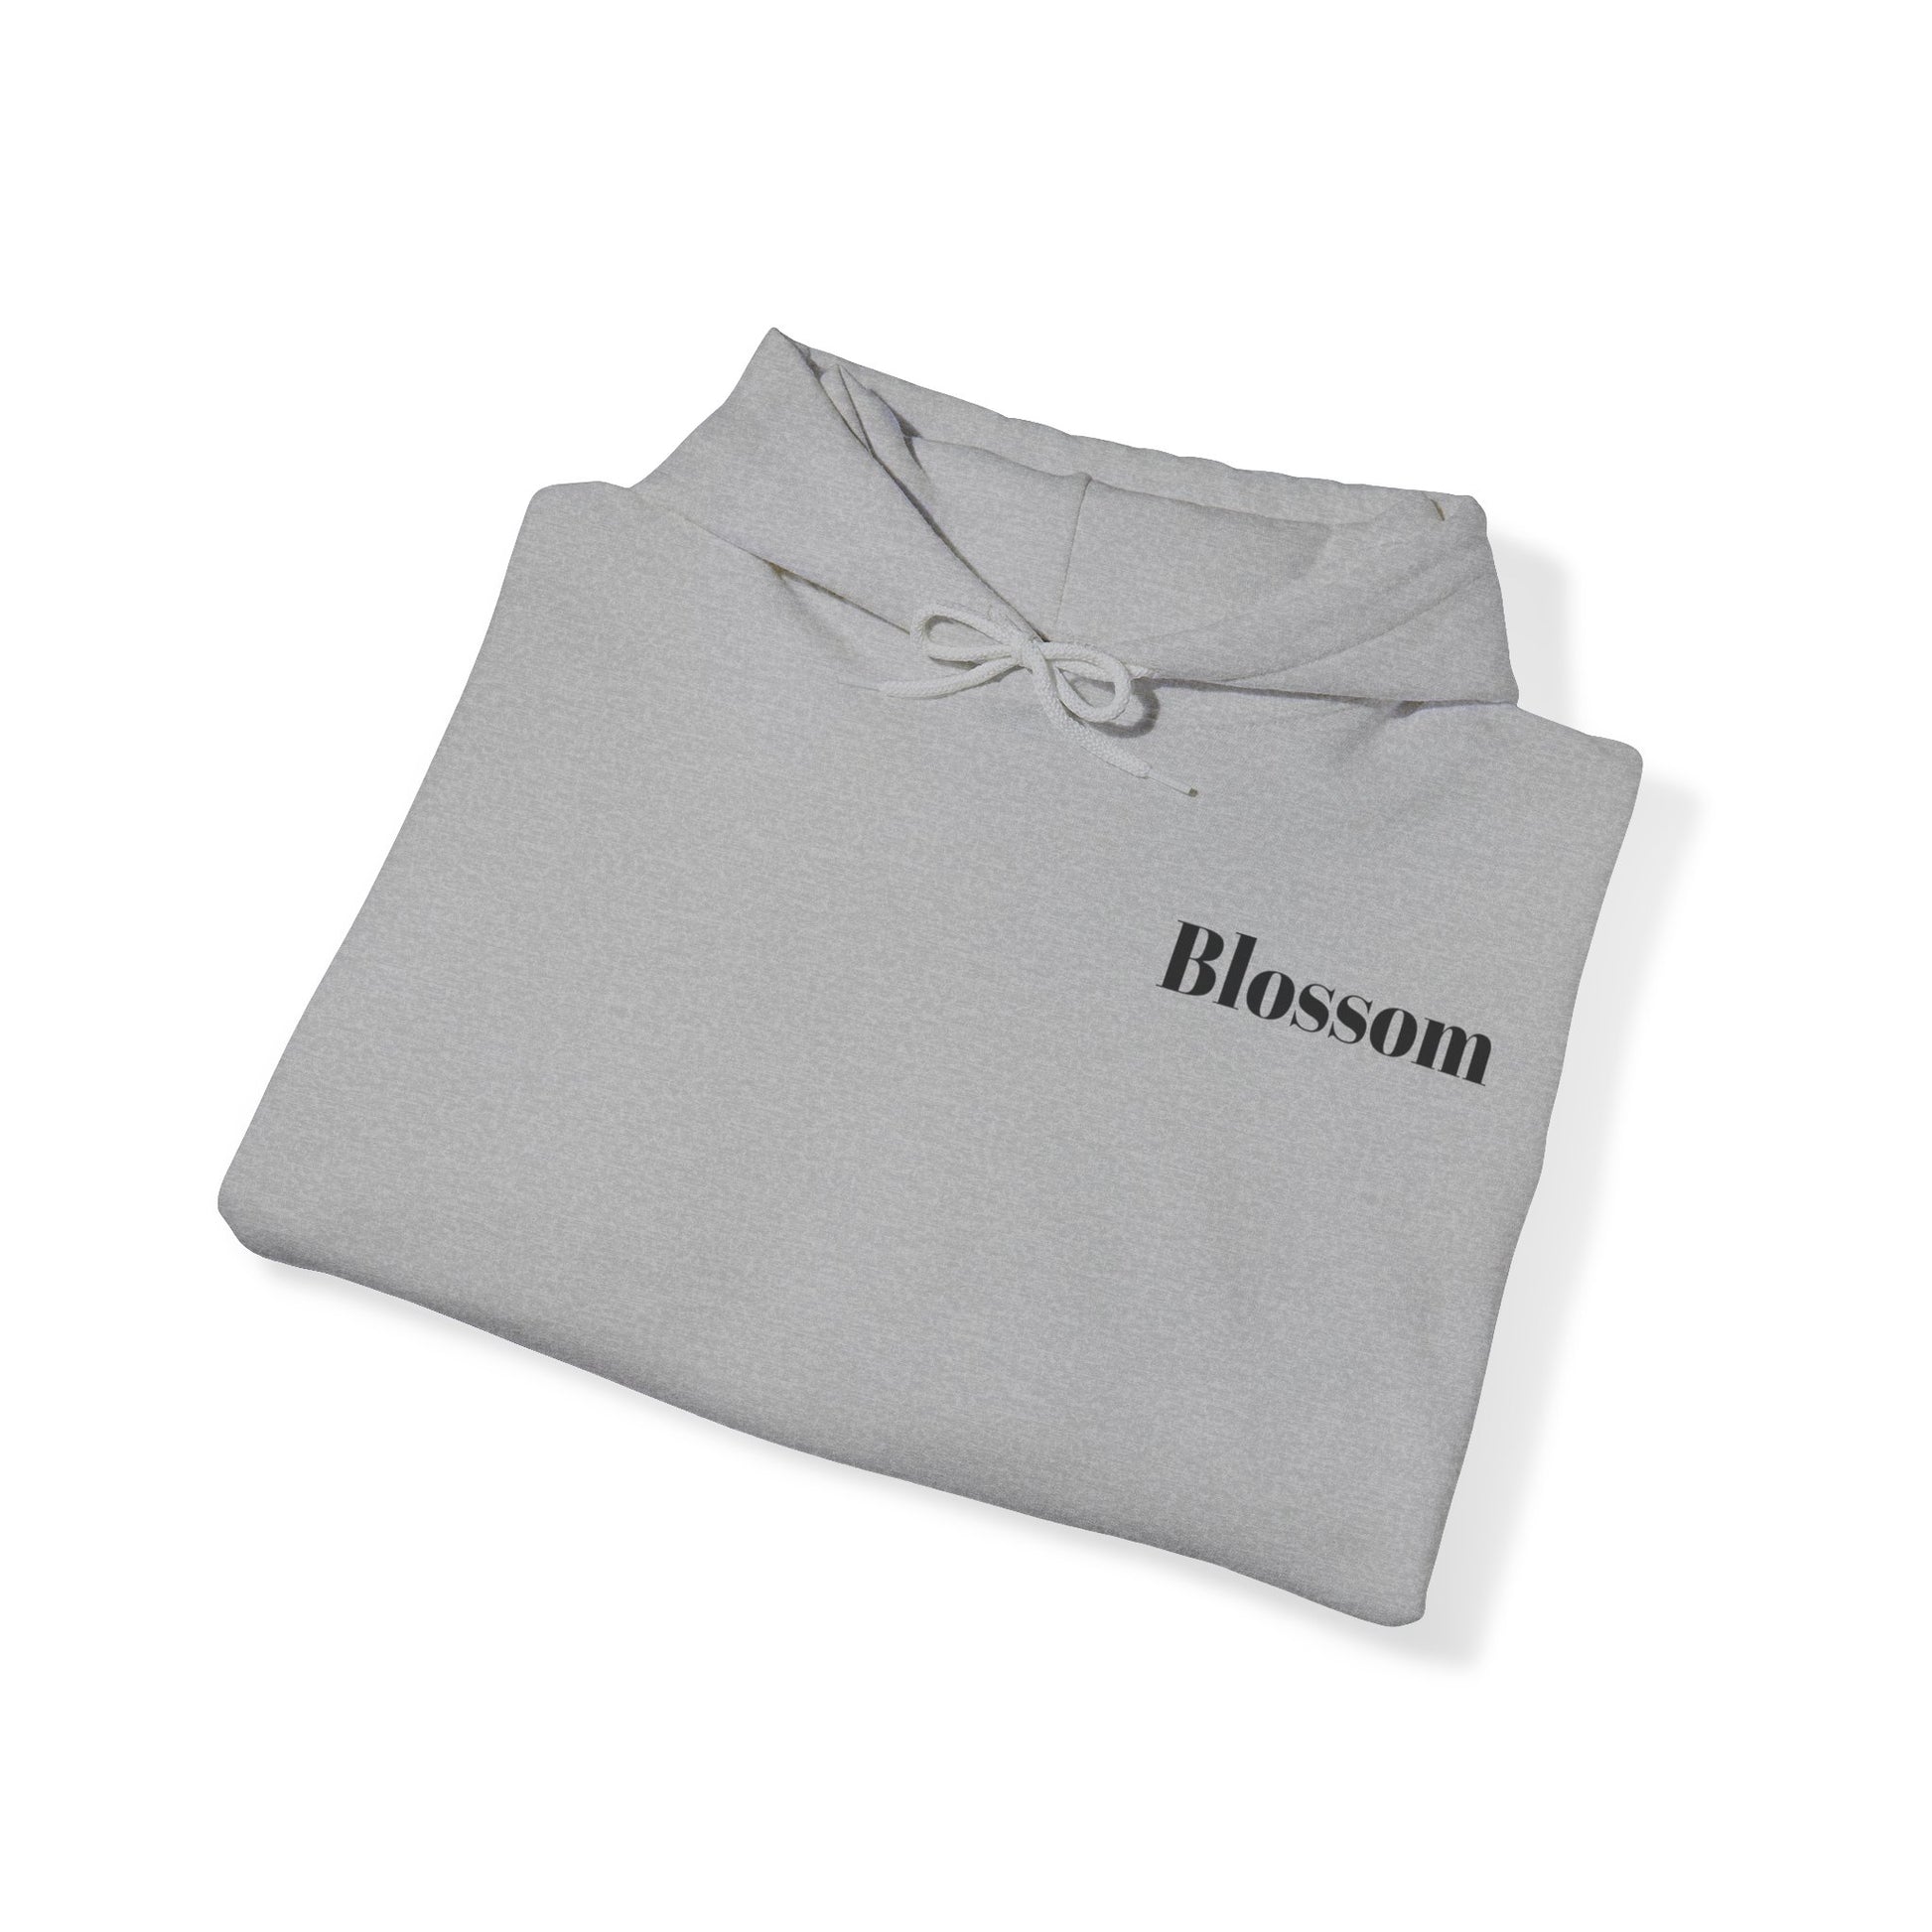 Blossom Unisex Hooded Sweatshirt with Heavy Blend Fabric5